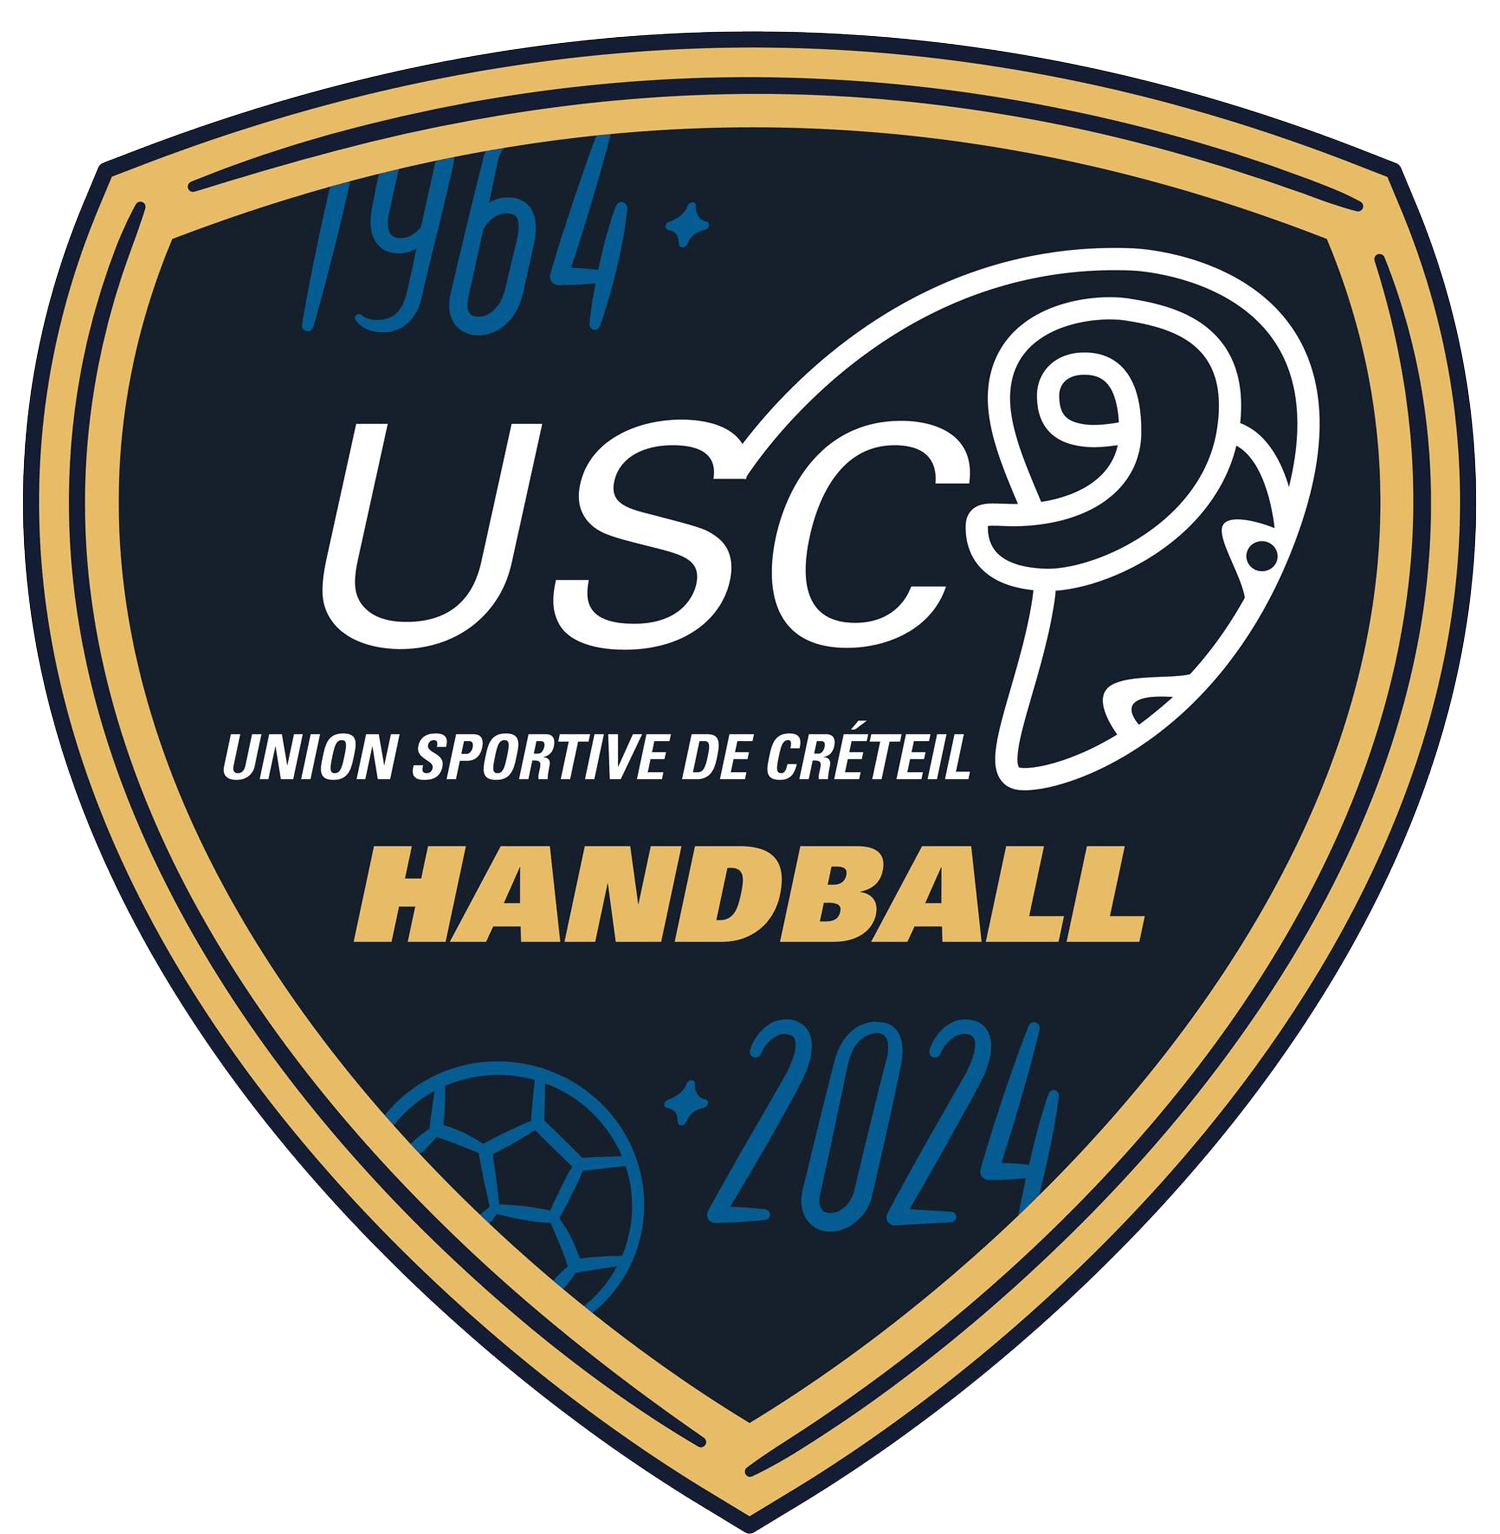 Union Sportive de Créteil Handball